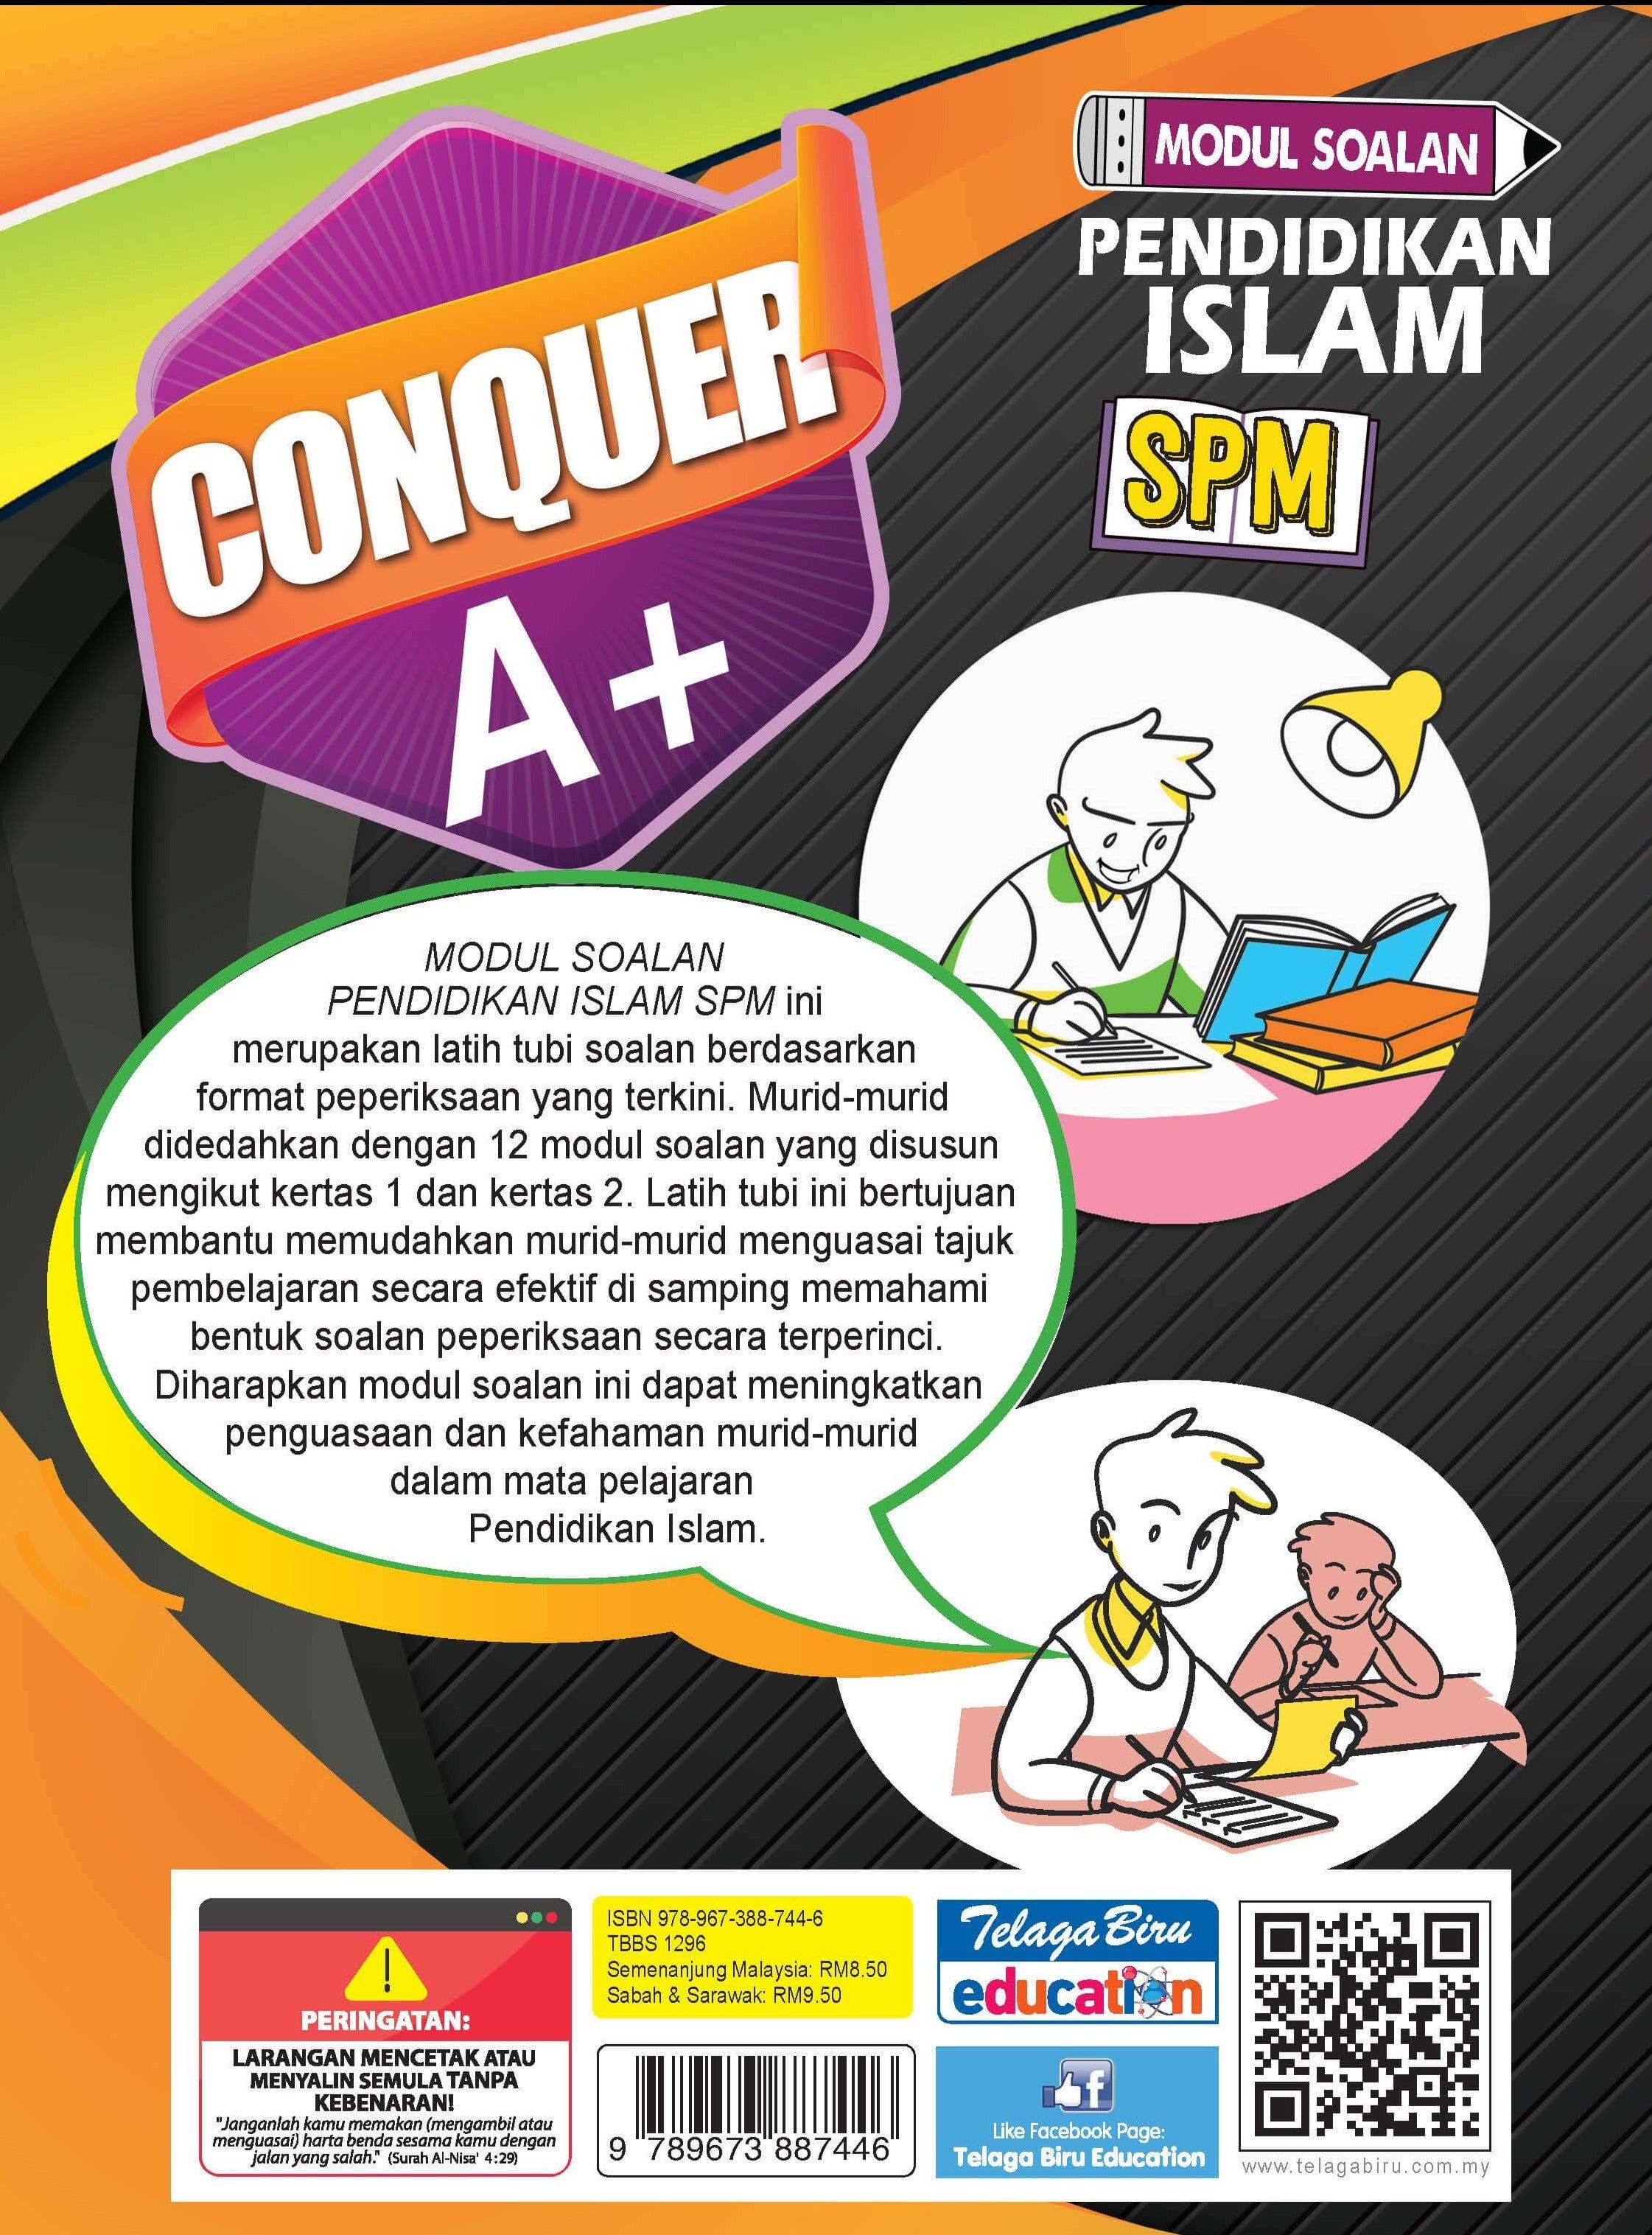 Conquer A+ Modul Soalan Pendidikan Islam SPM- (TBBS1296)